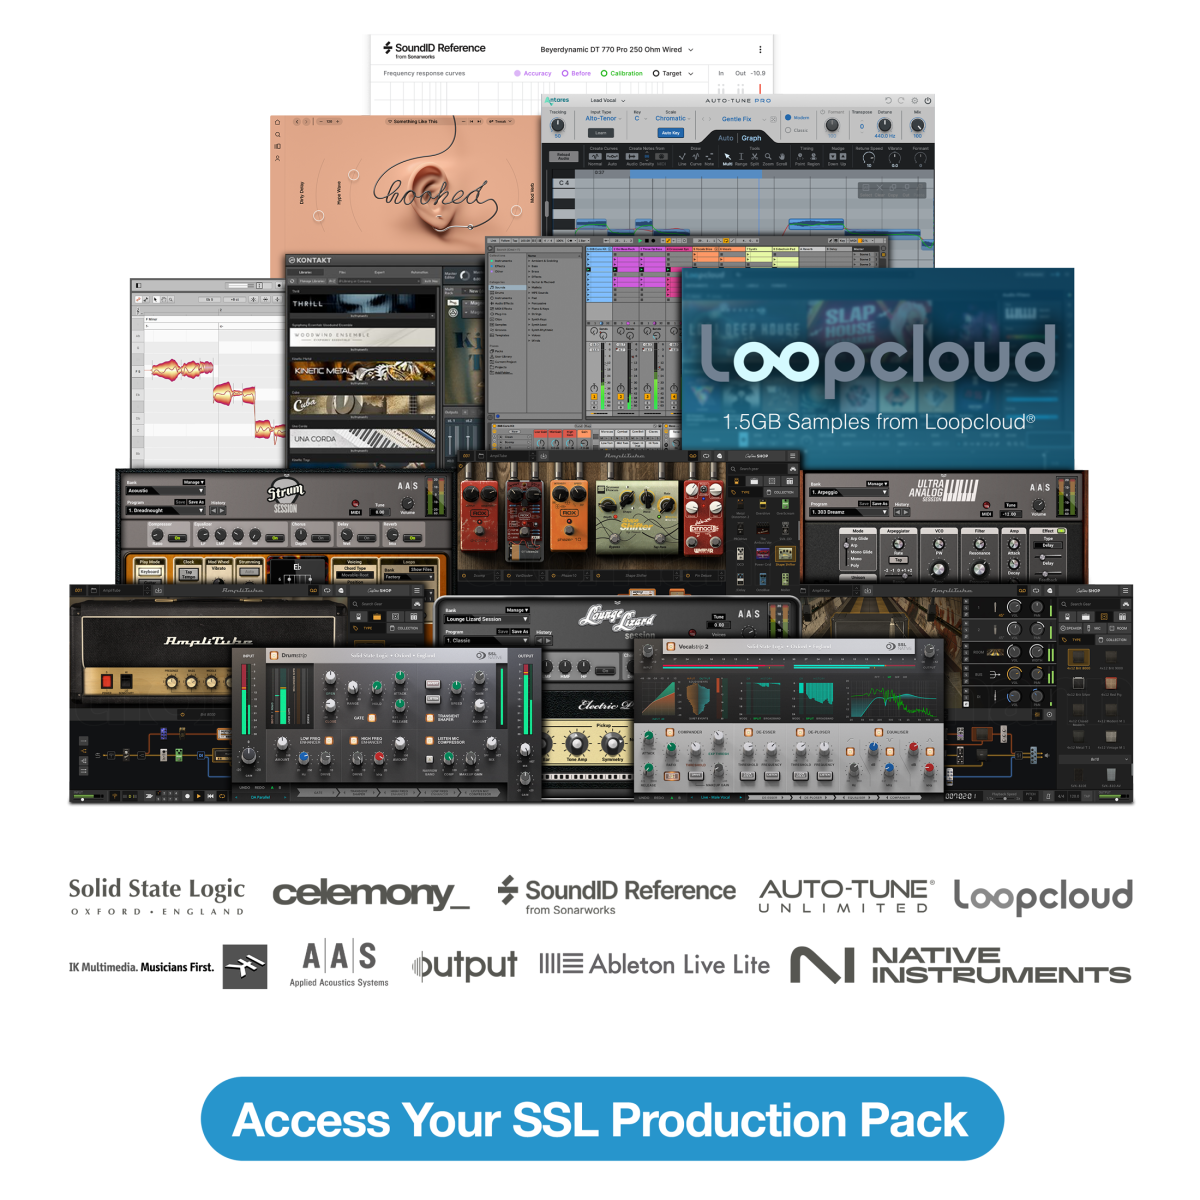 SSL Production Pack